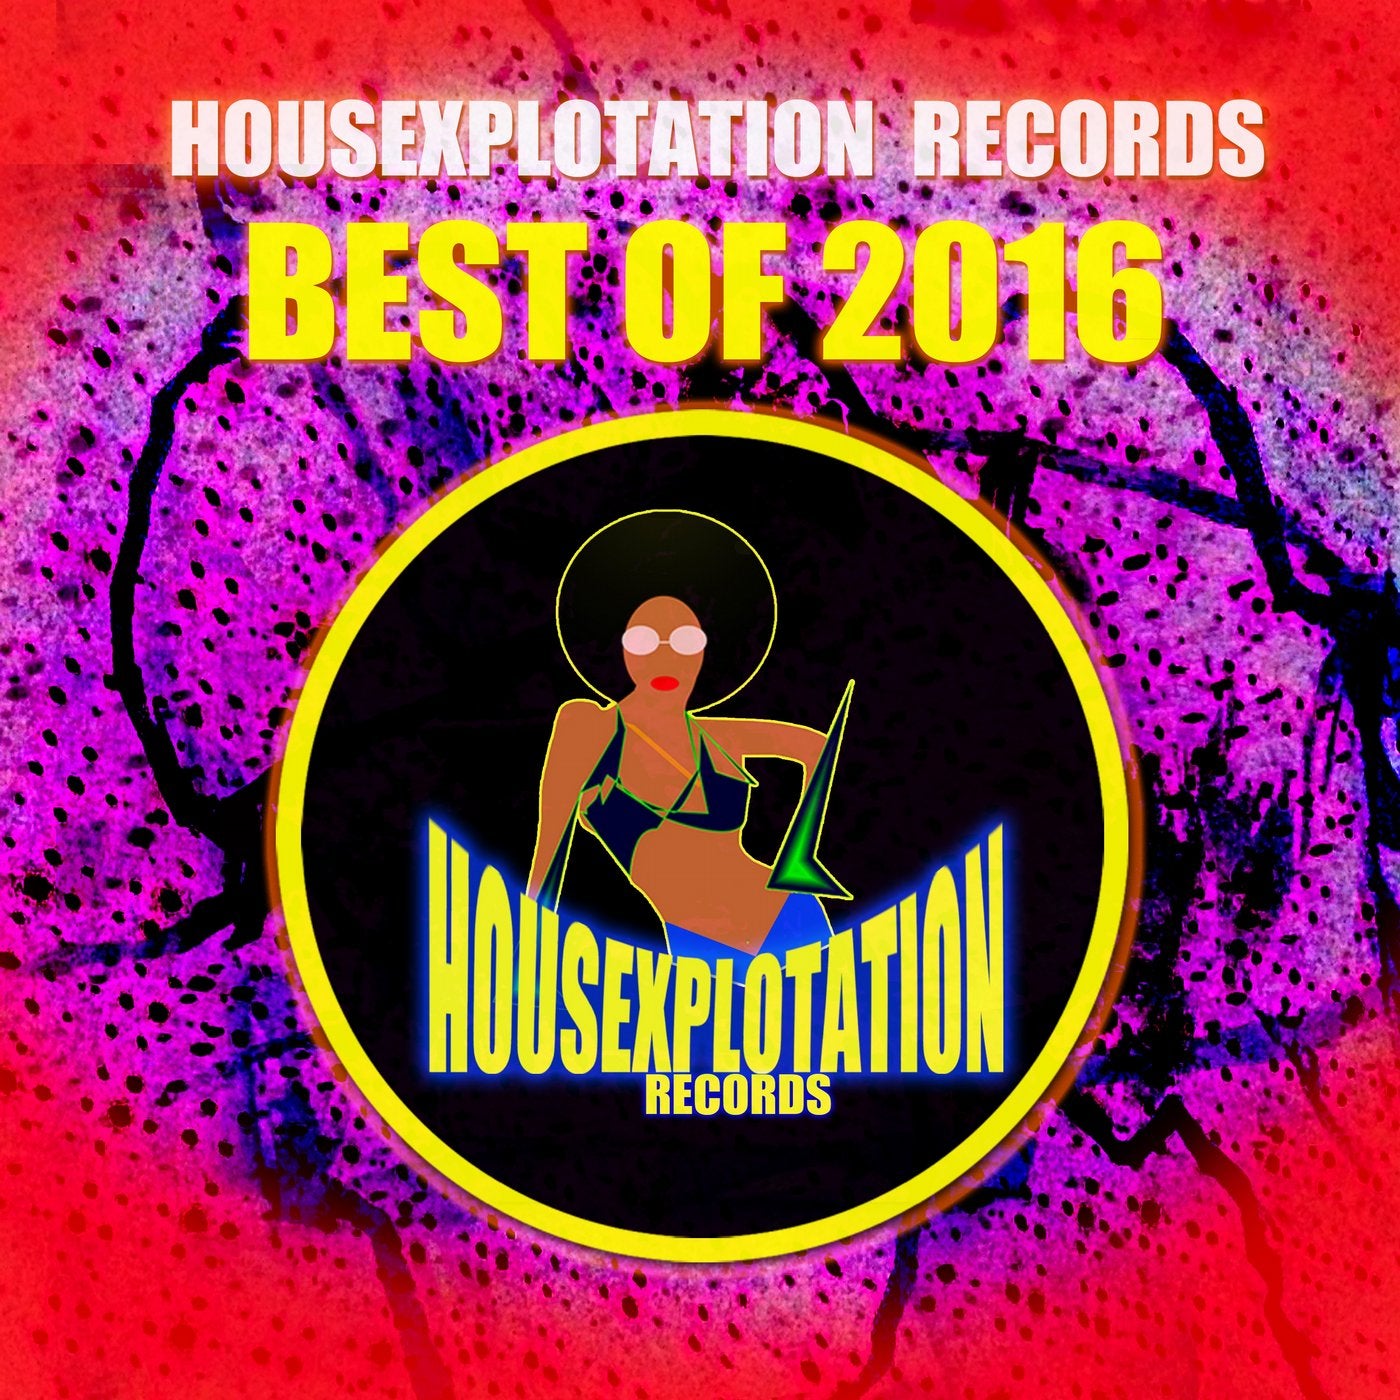 Housexplotation Records Best of 2016